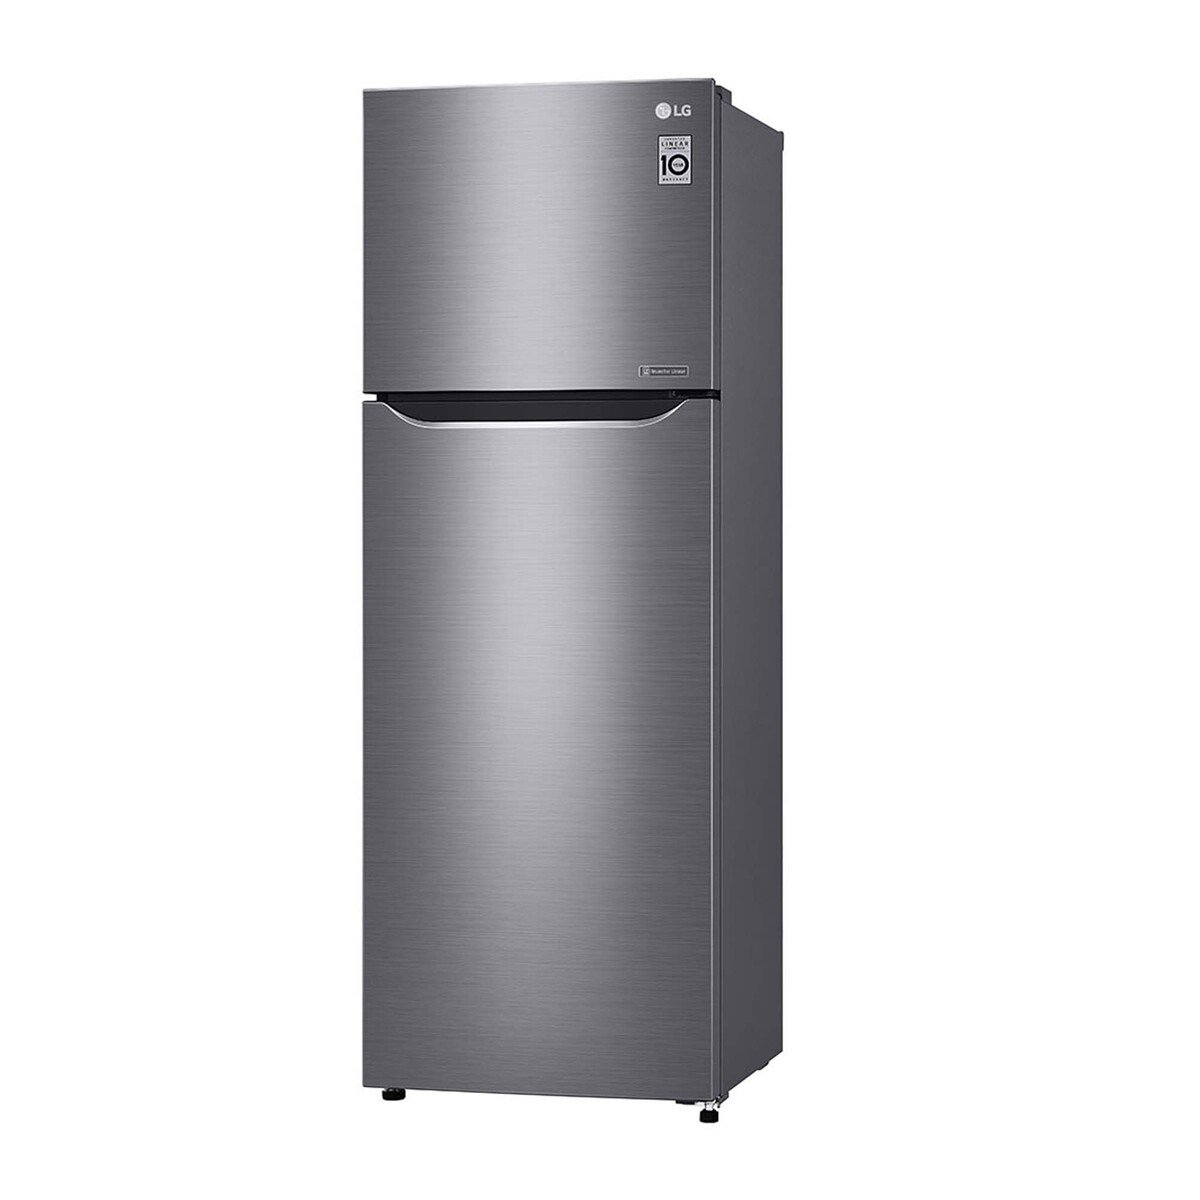 LG Double Door Refrigerator GN-B402SLCB 335LTR, Smart Inverter Compressor, Pull-out Tray, Big Size Veggie Box